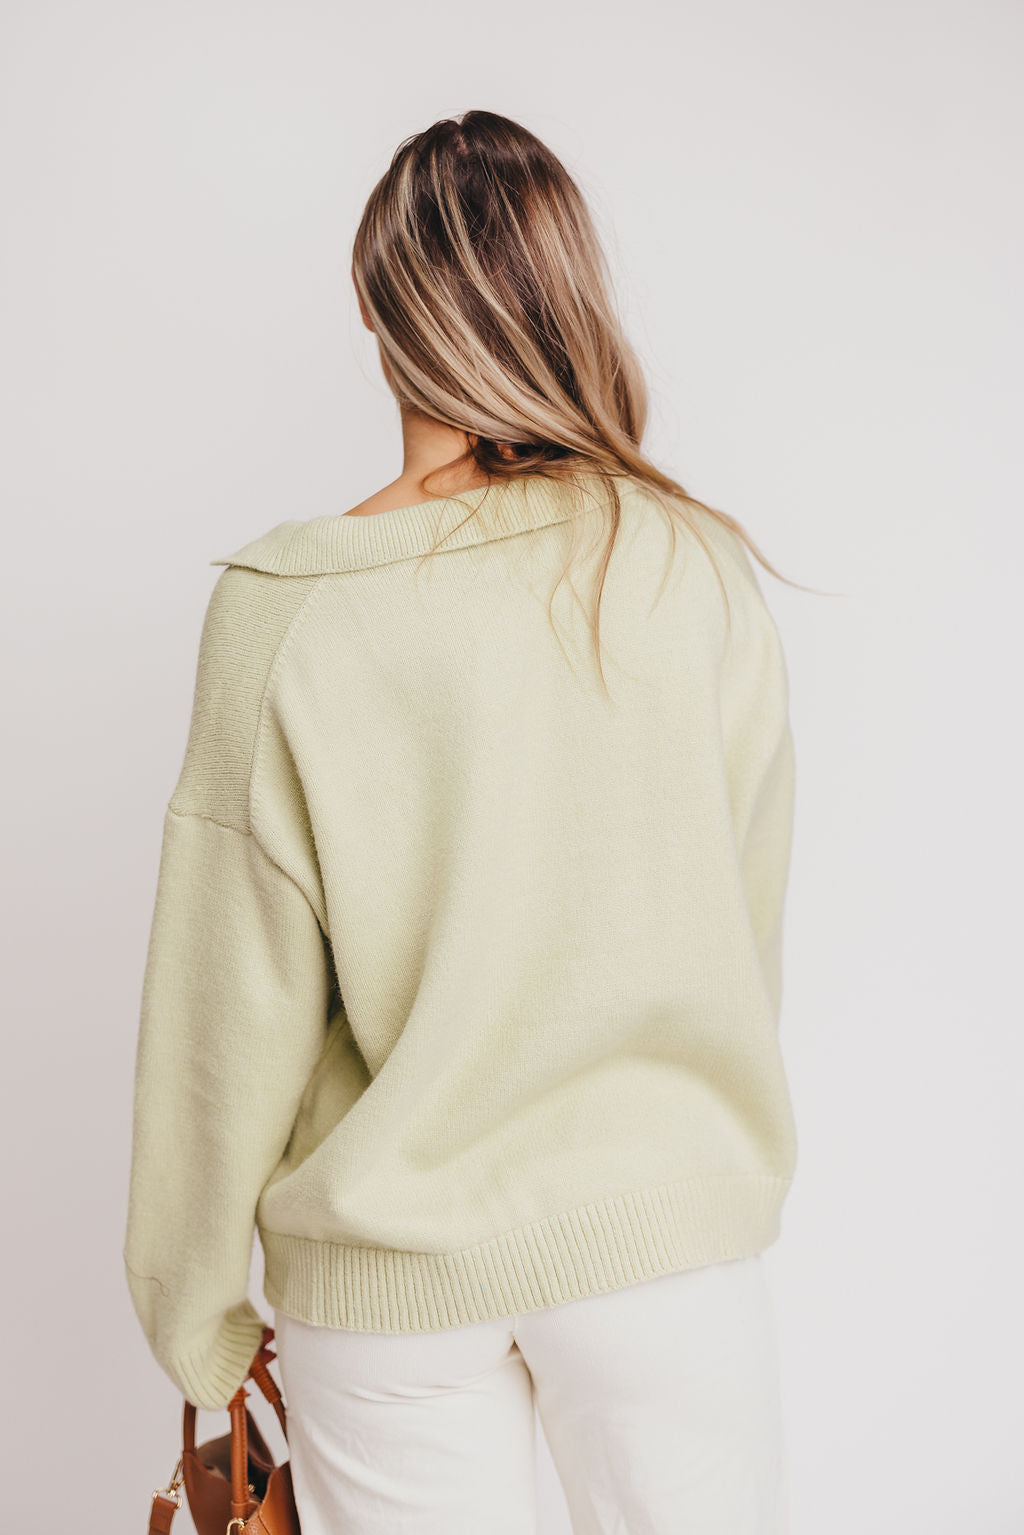 Stratford Collared V-Neck Sweater in Pale Sage